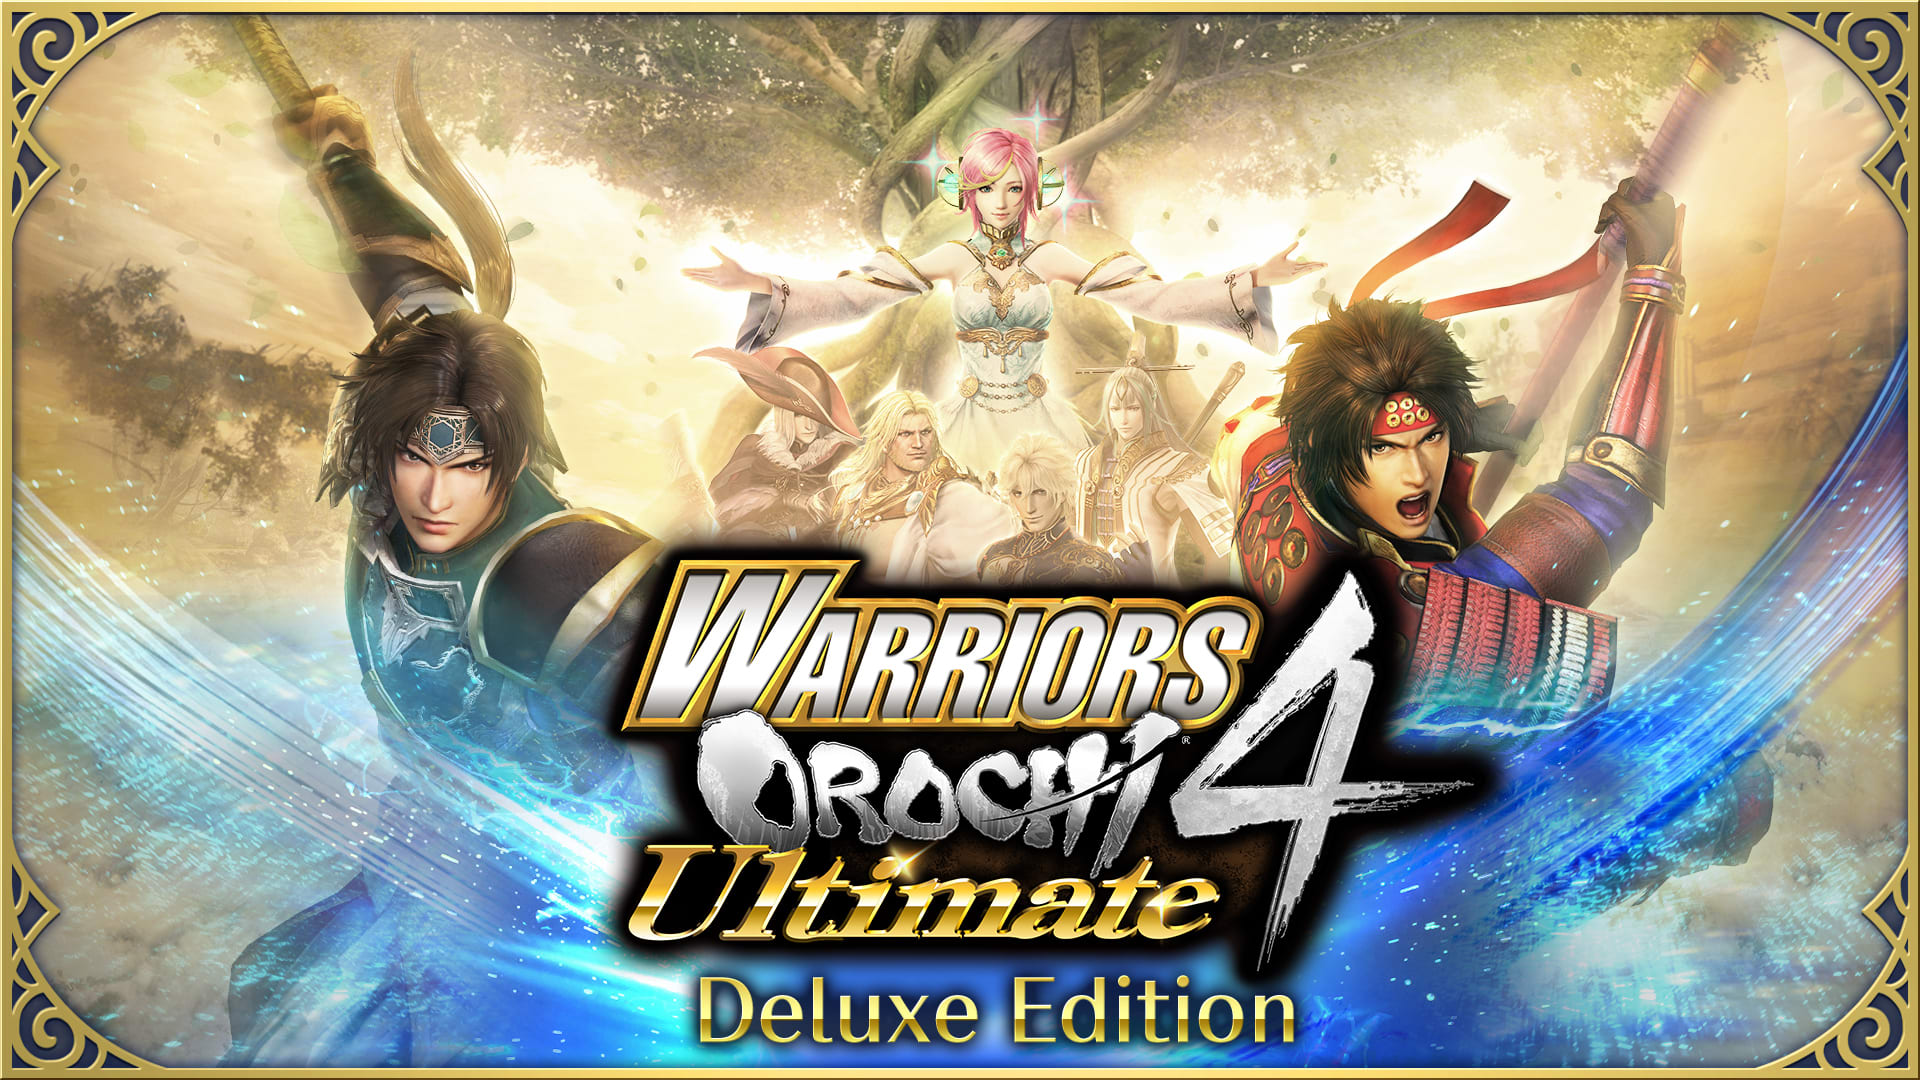 WARRIORS OROCHI 4 Ultimate Deluxe Edition